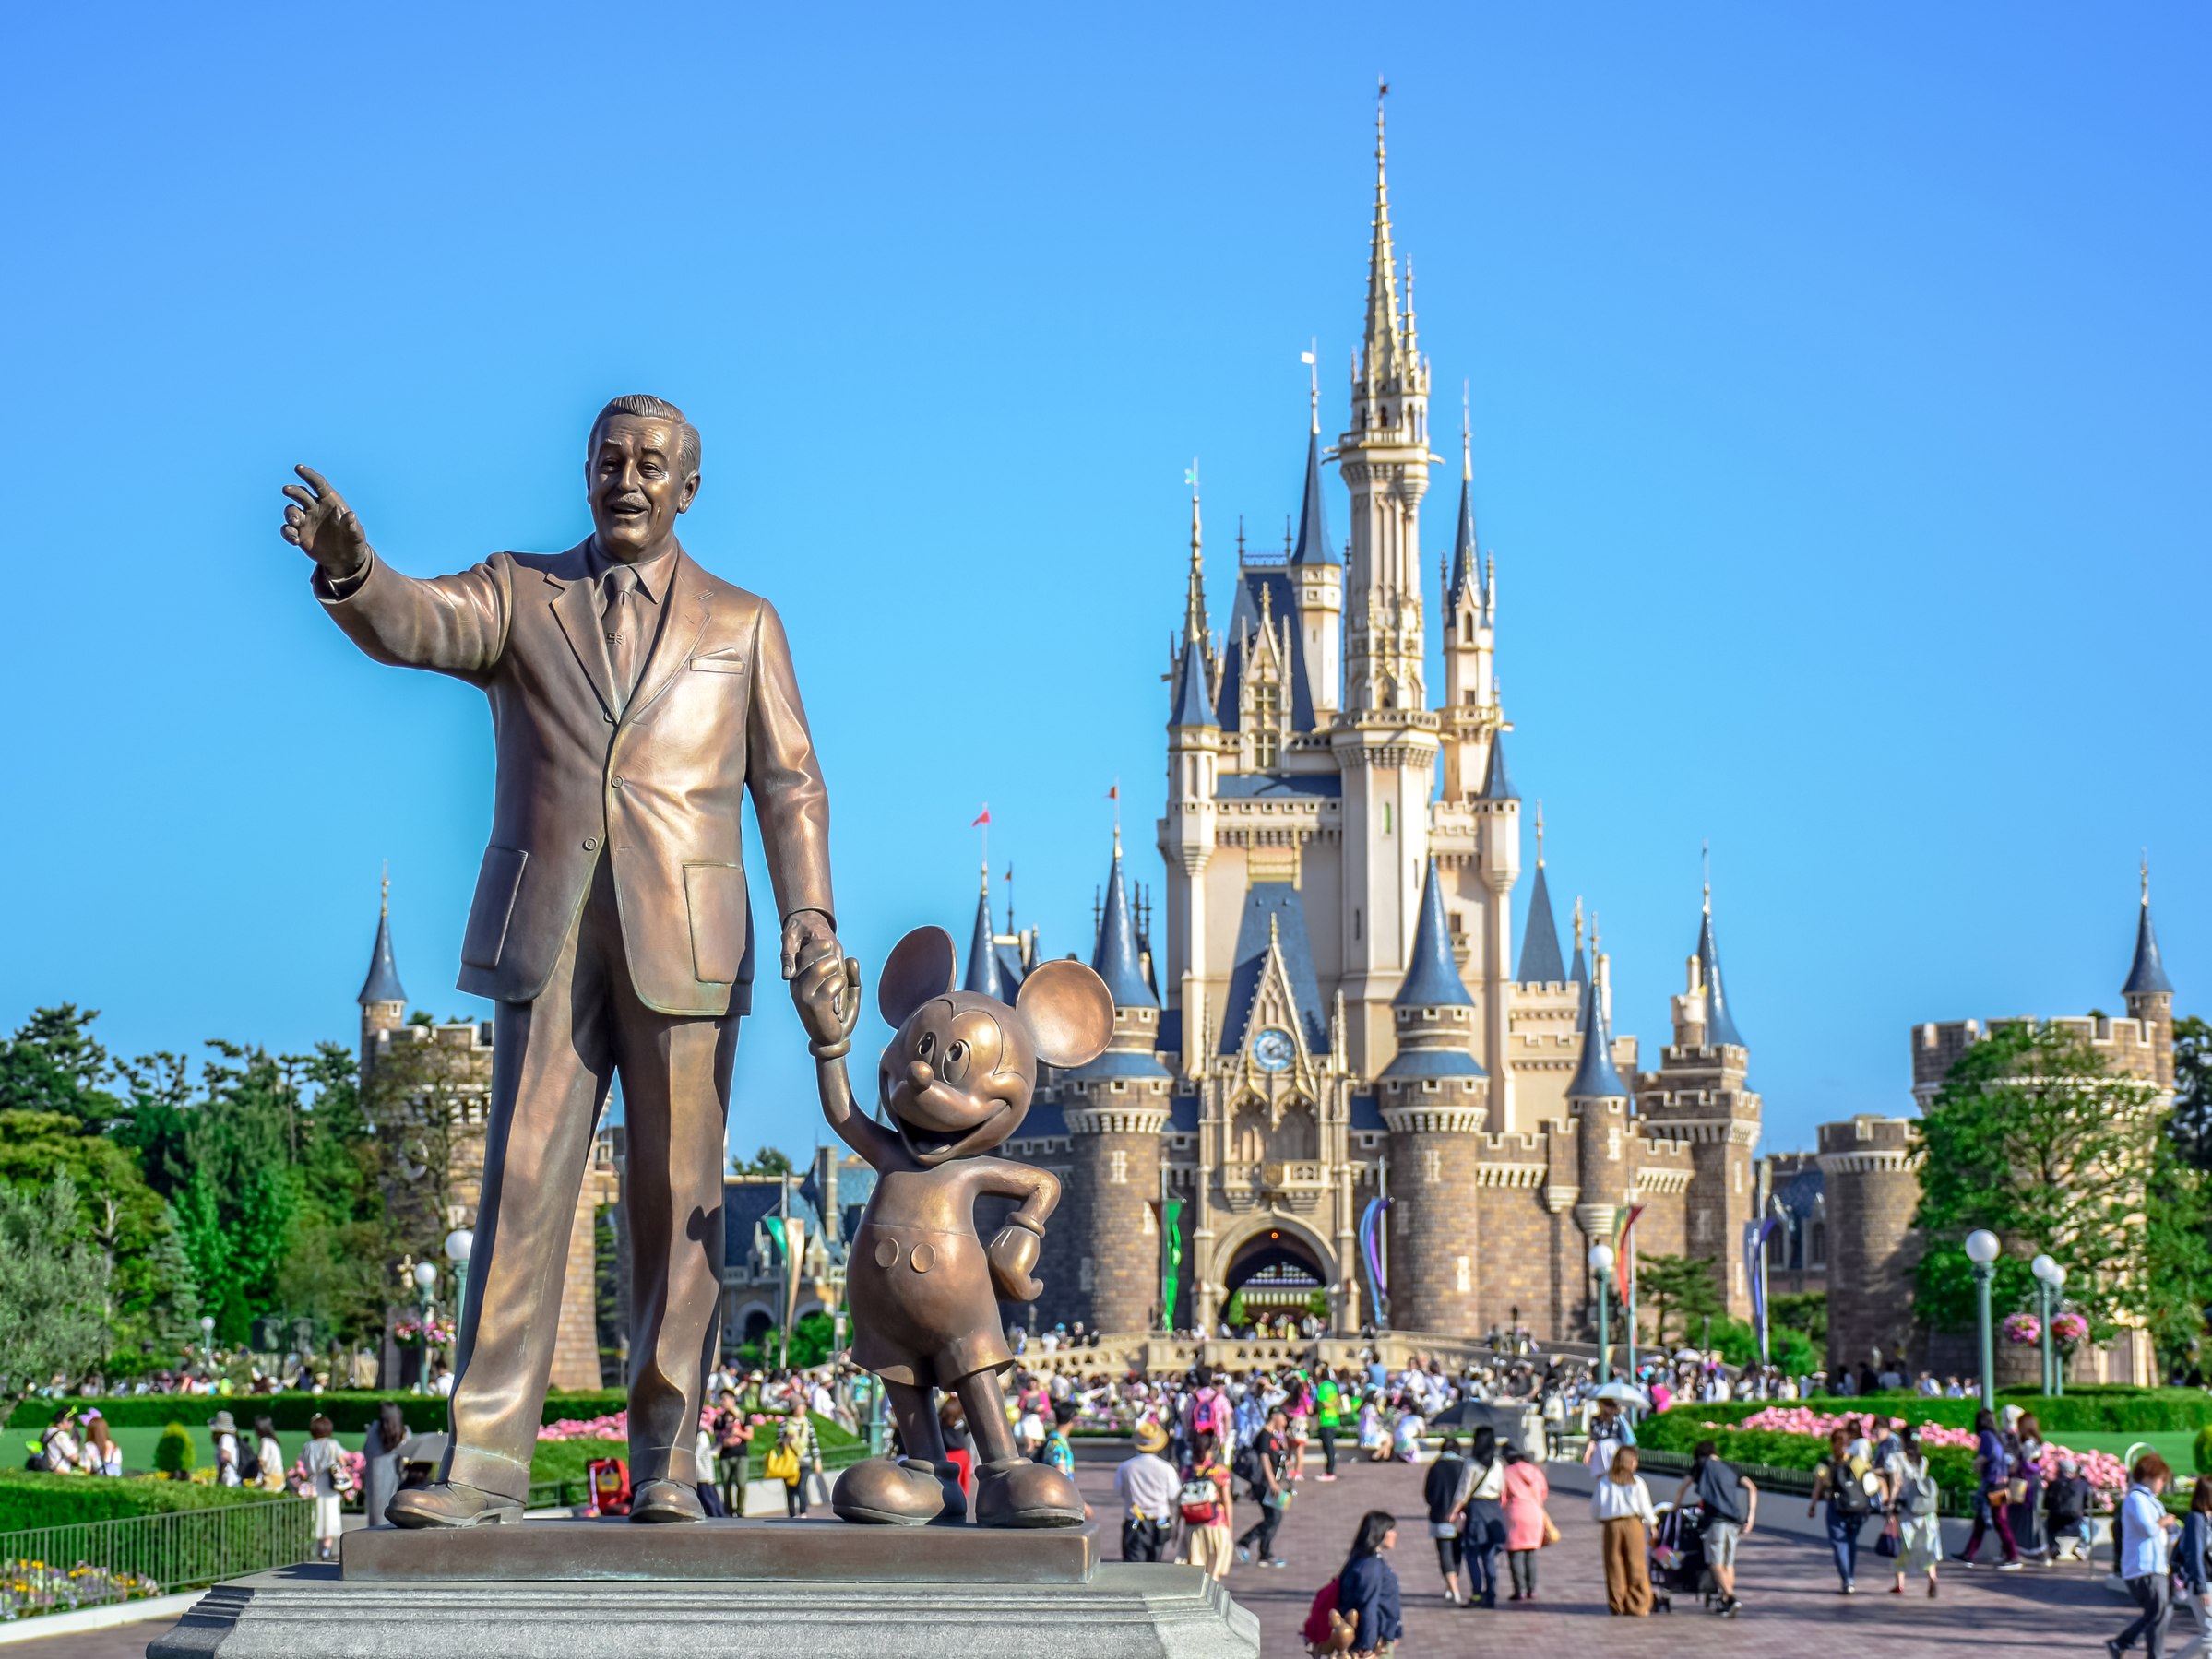 Theme parks around the world to explore from Dubai - Tokyo Disneyland, Japan